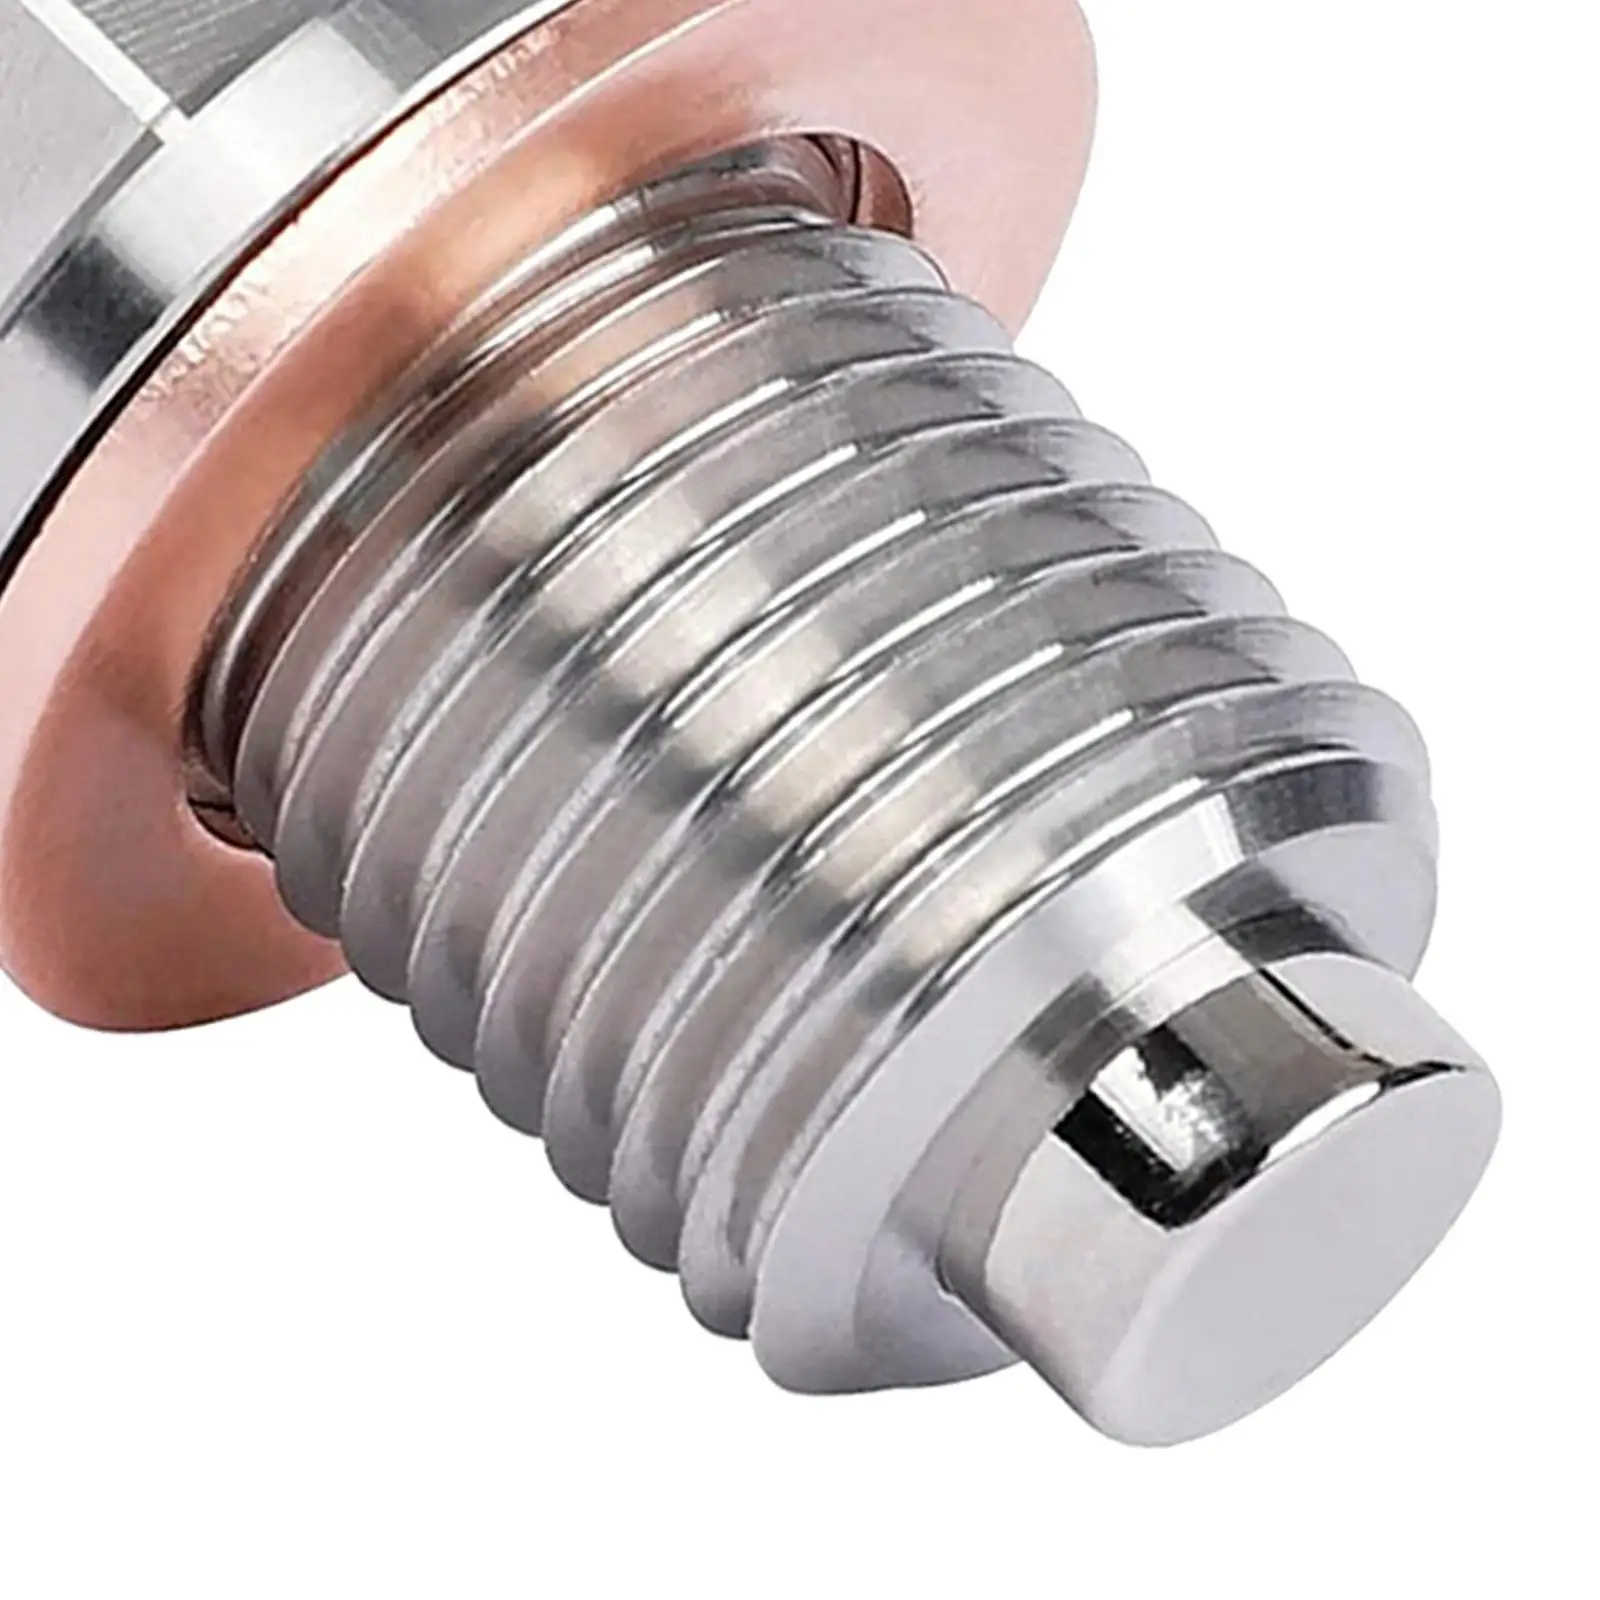 Oil Pan Drain Plug Engine Oil Pan Protection Plug Neodymium Magnet Bolt for Car